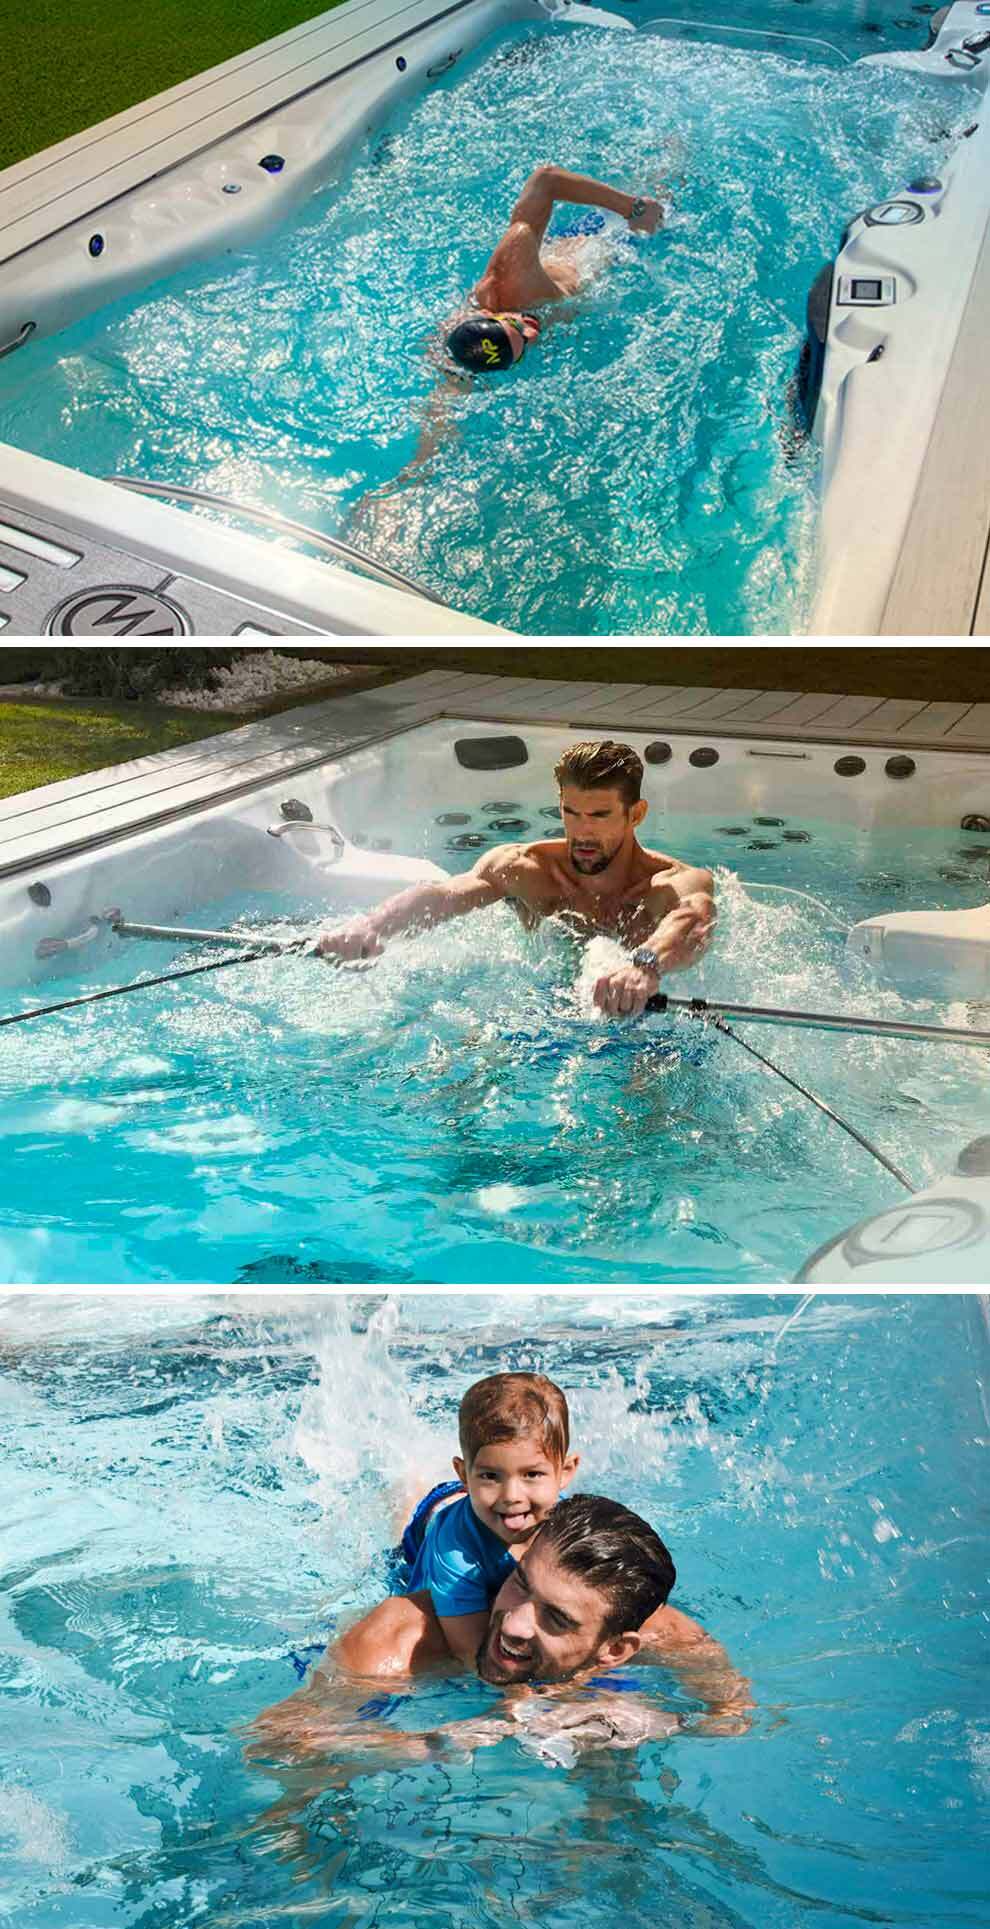 Michael Phelps Signature Swim Spas by Master Spas